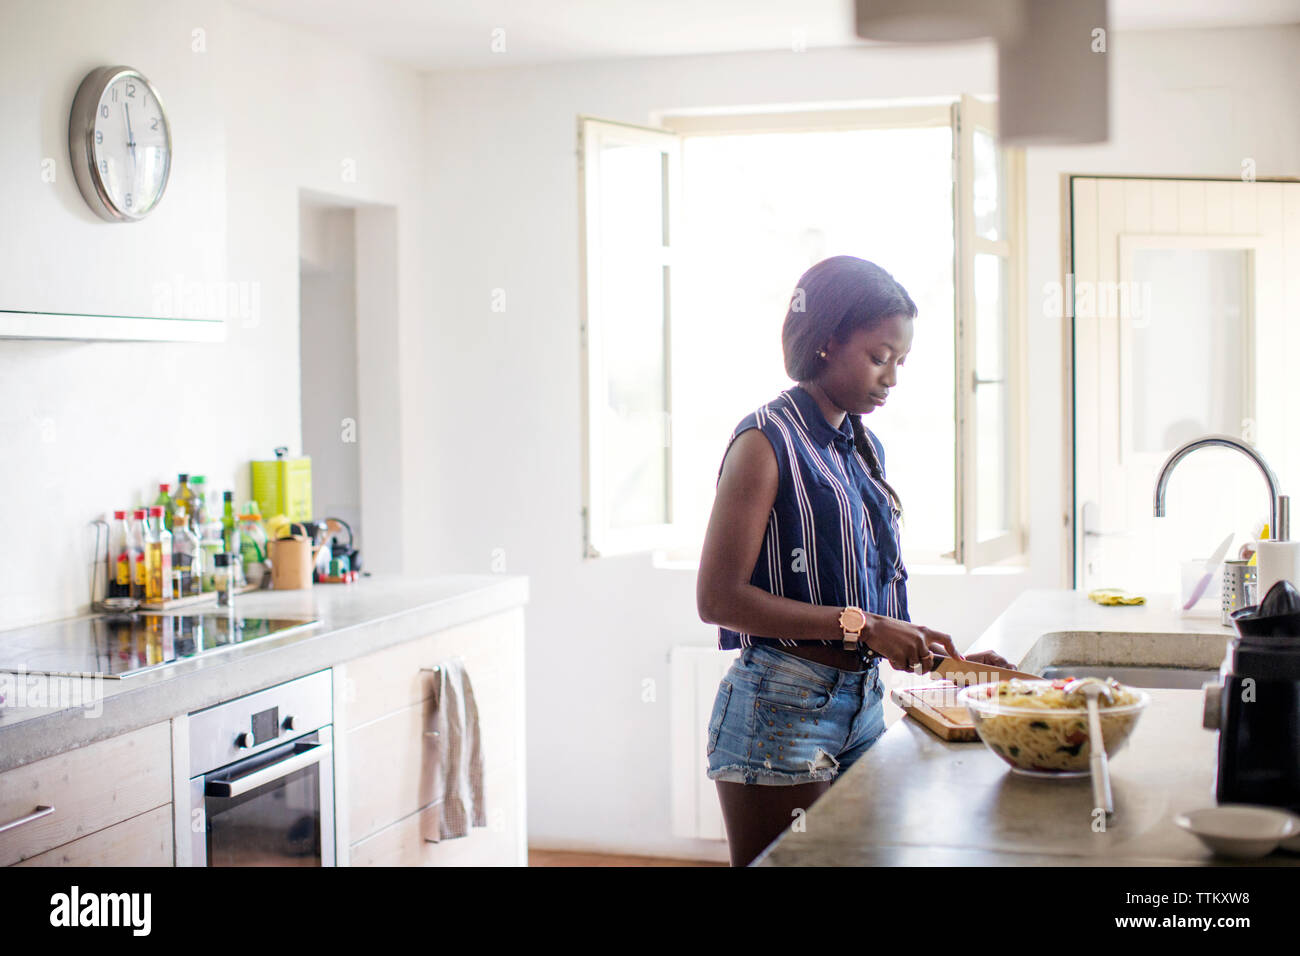 Woman preparing food in kitchen Stock Photo